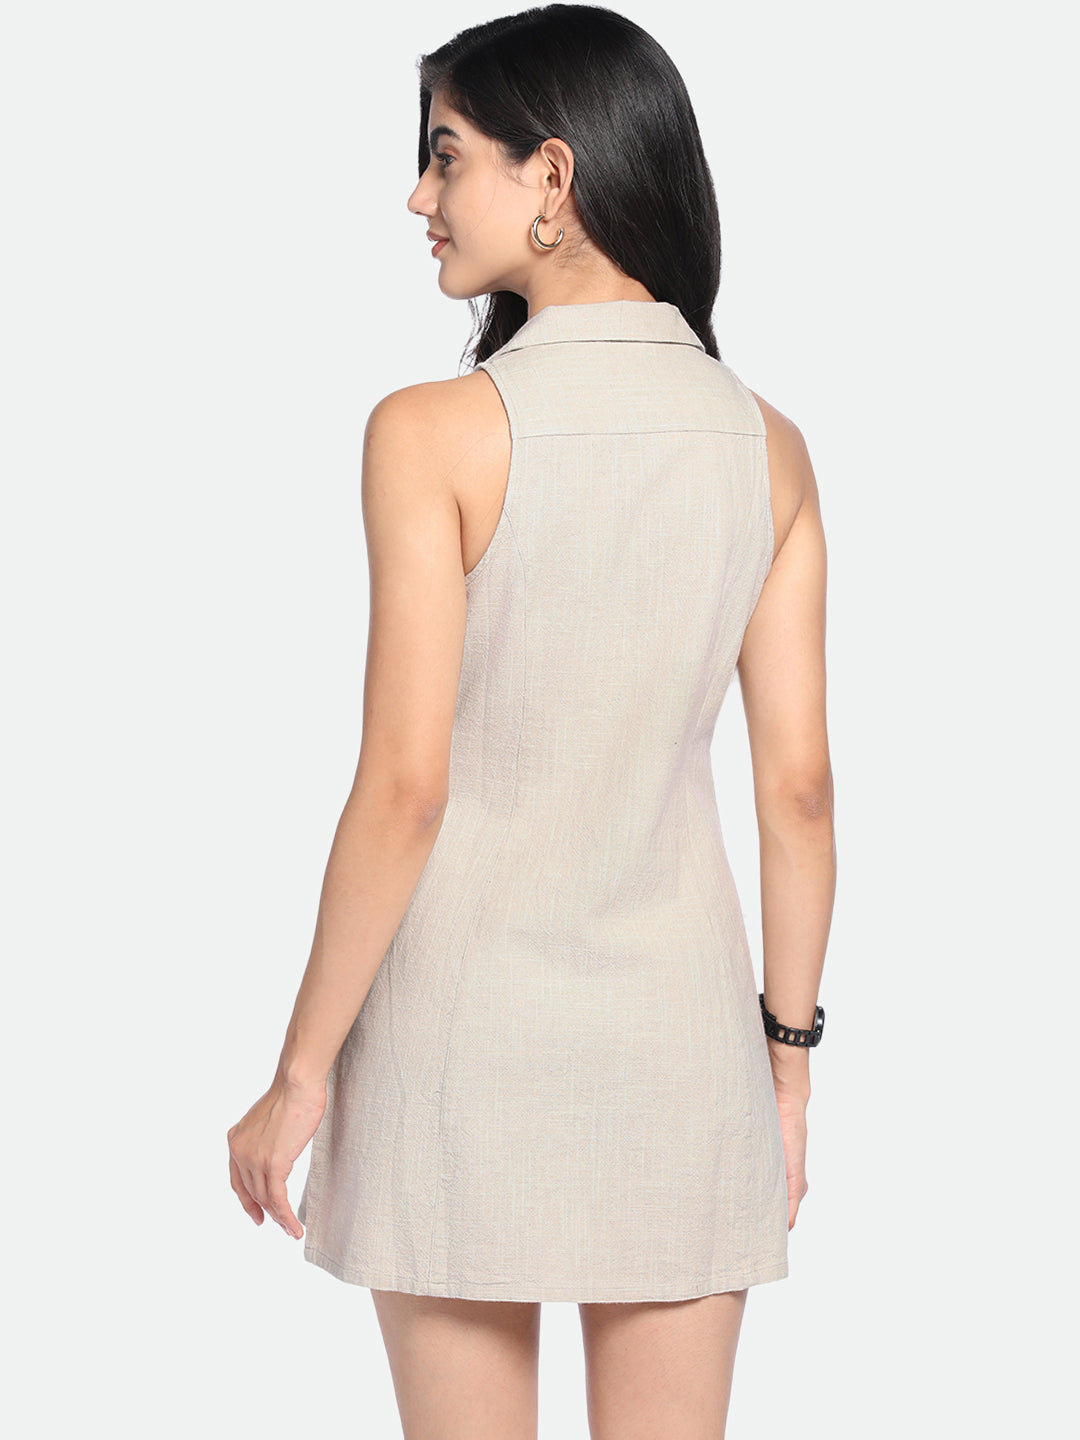 DL Woman Off-White V-Neck Sleeveless Knee Length A-line Dress